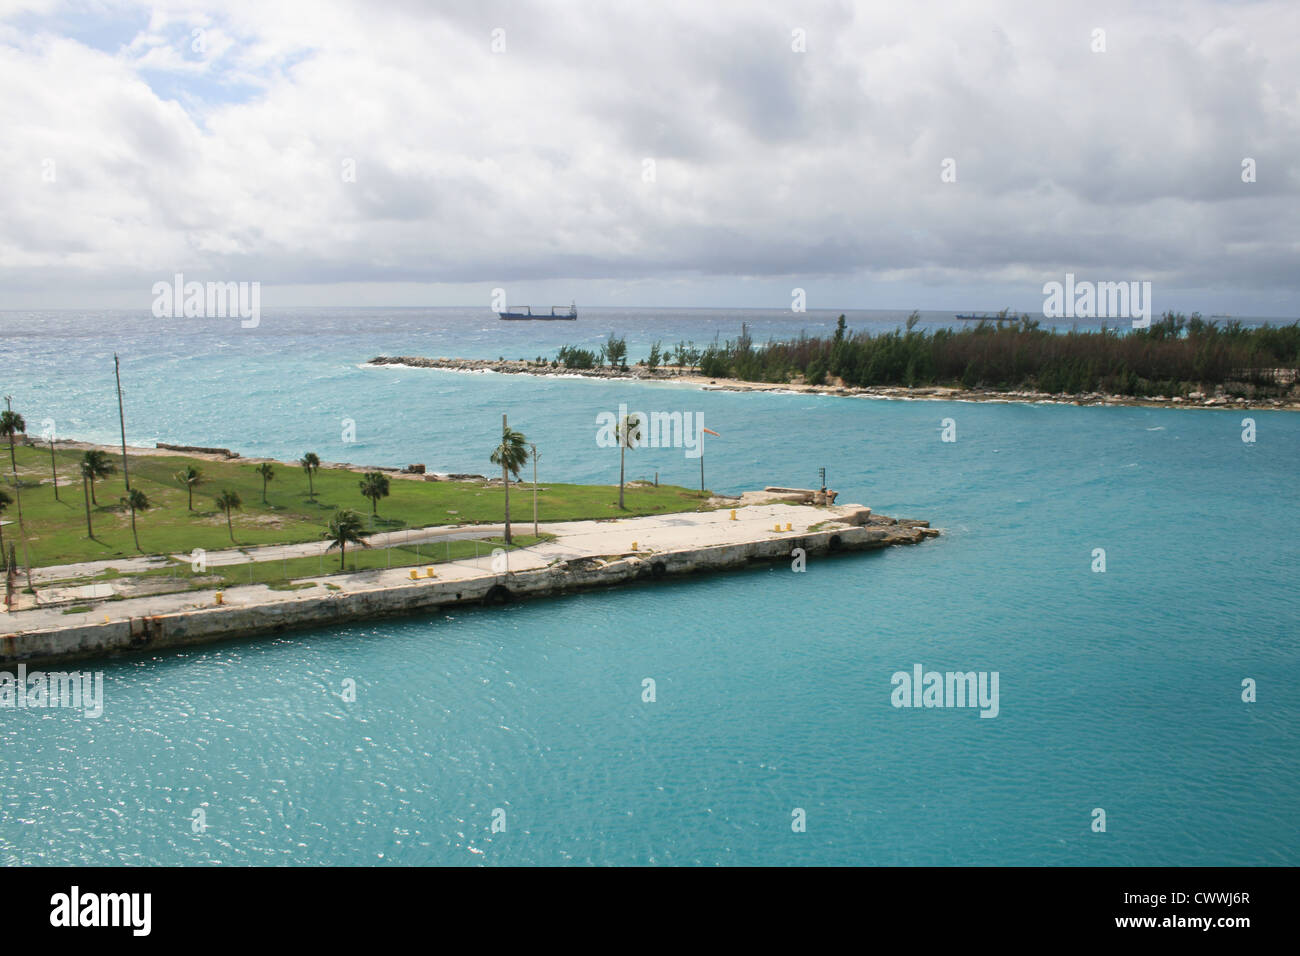 Grand Bahamas Wasserstraße Bahama Island Ozean Seelandschaft Bild Stockfoto